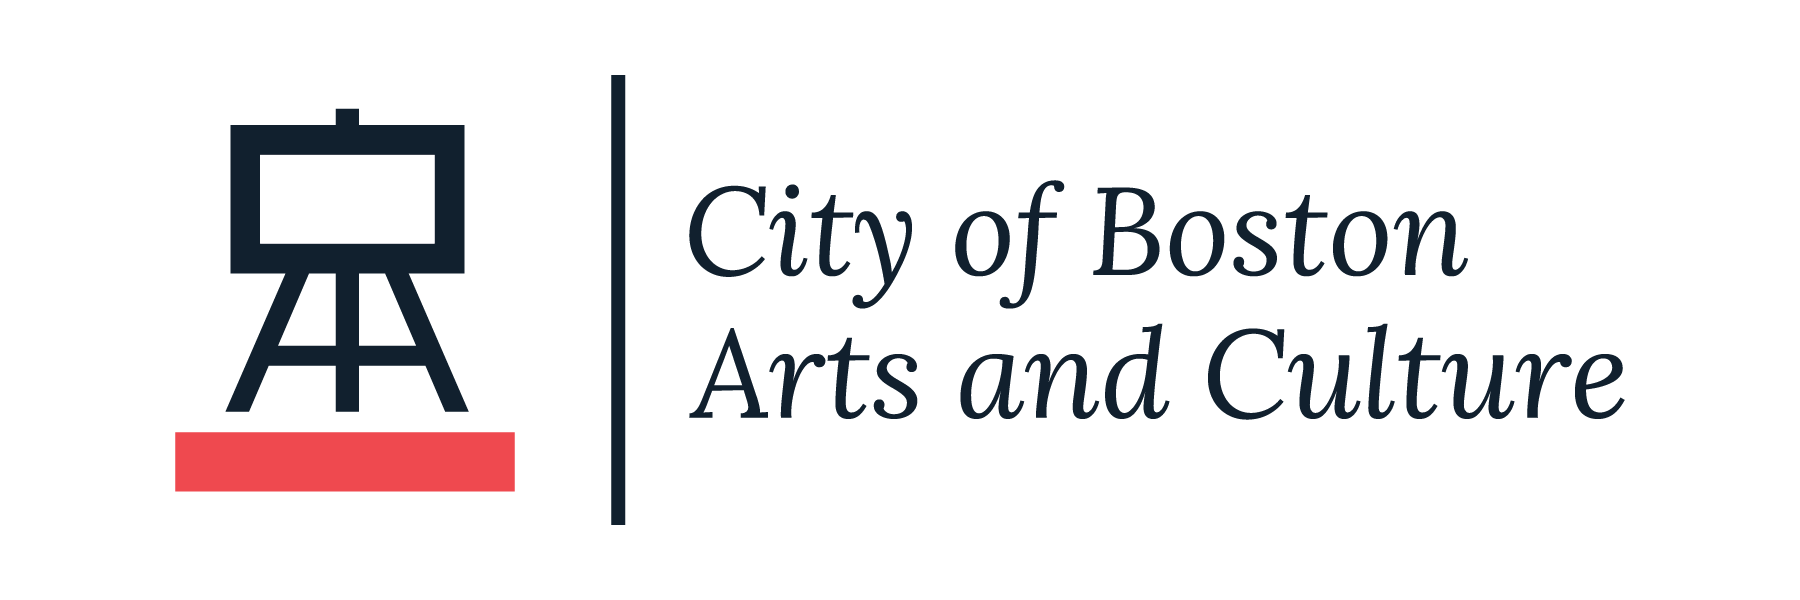 City of Boston arts and Culture logo